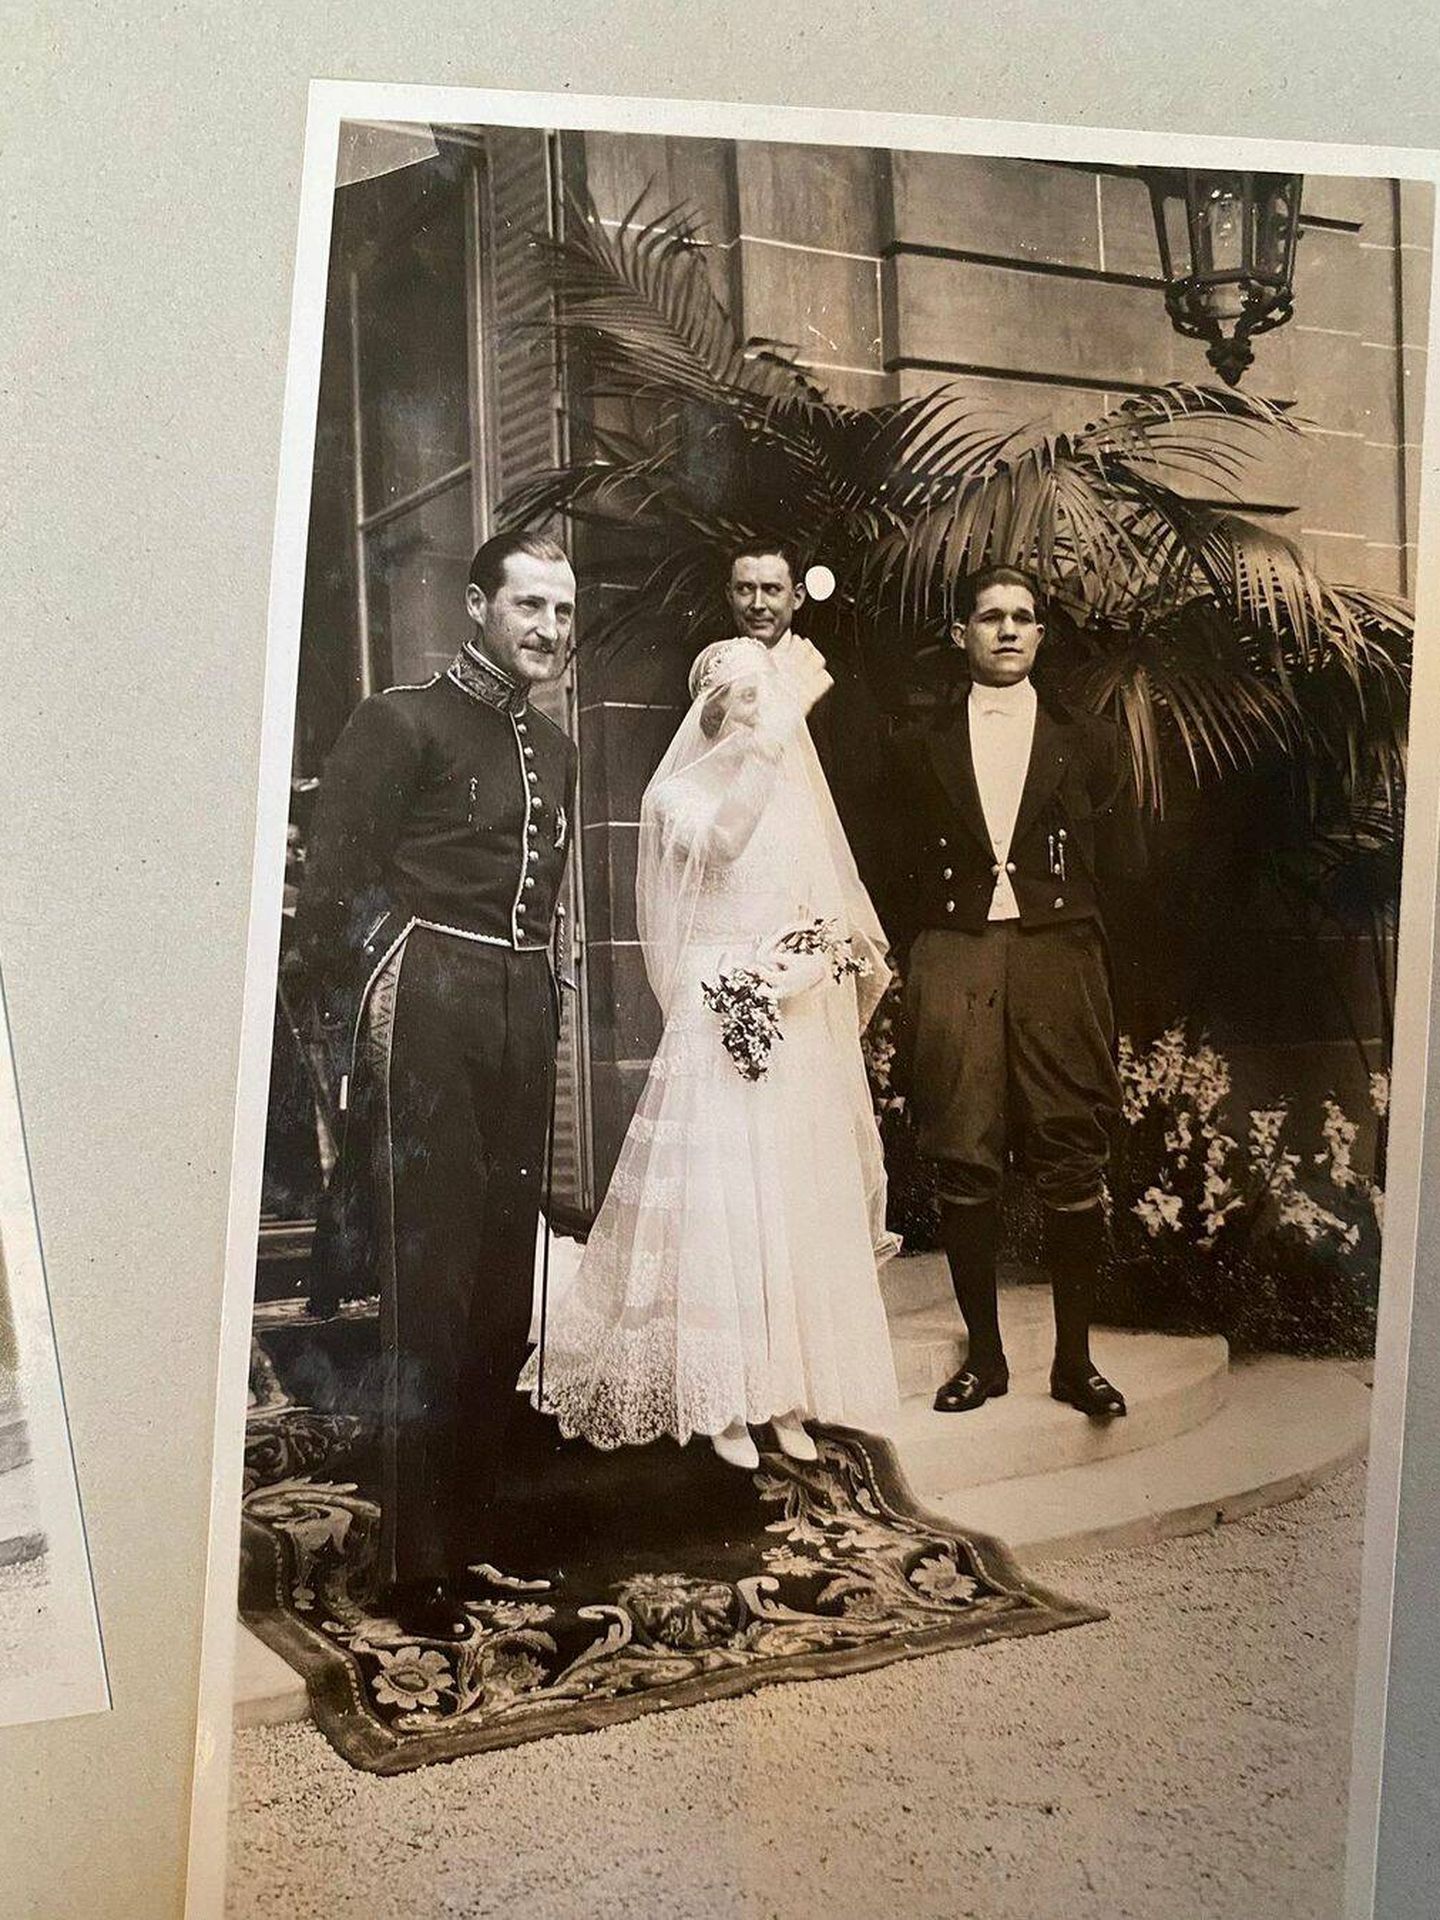 Foto de la boda de los tíos abuelos de Tamara Falcó. (Juan Avellaneda)